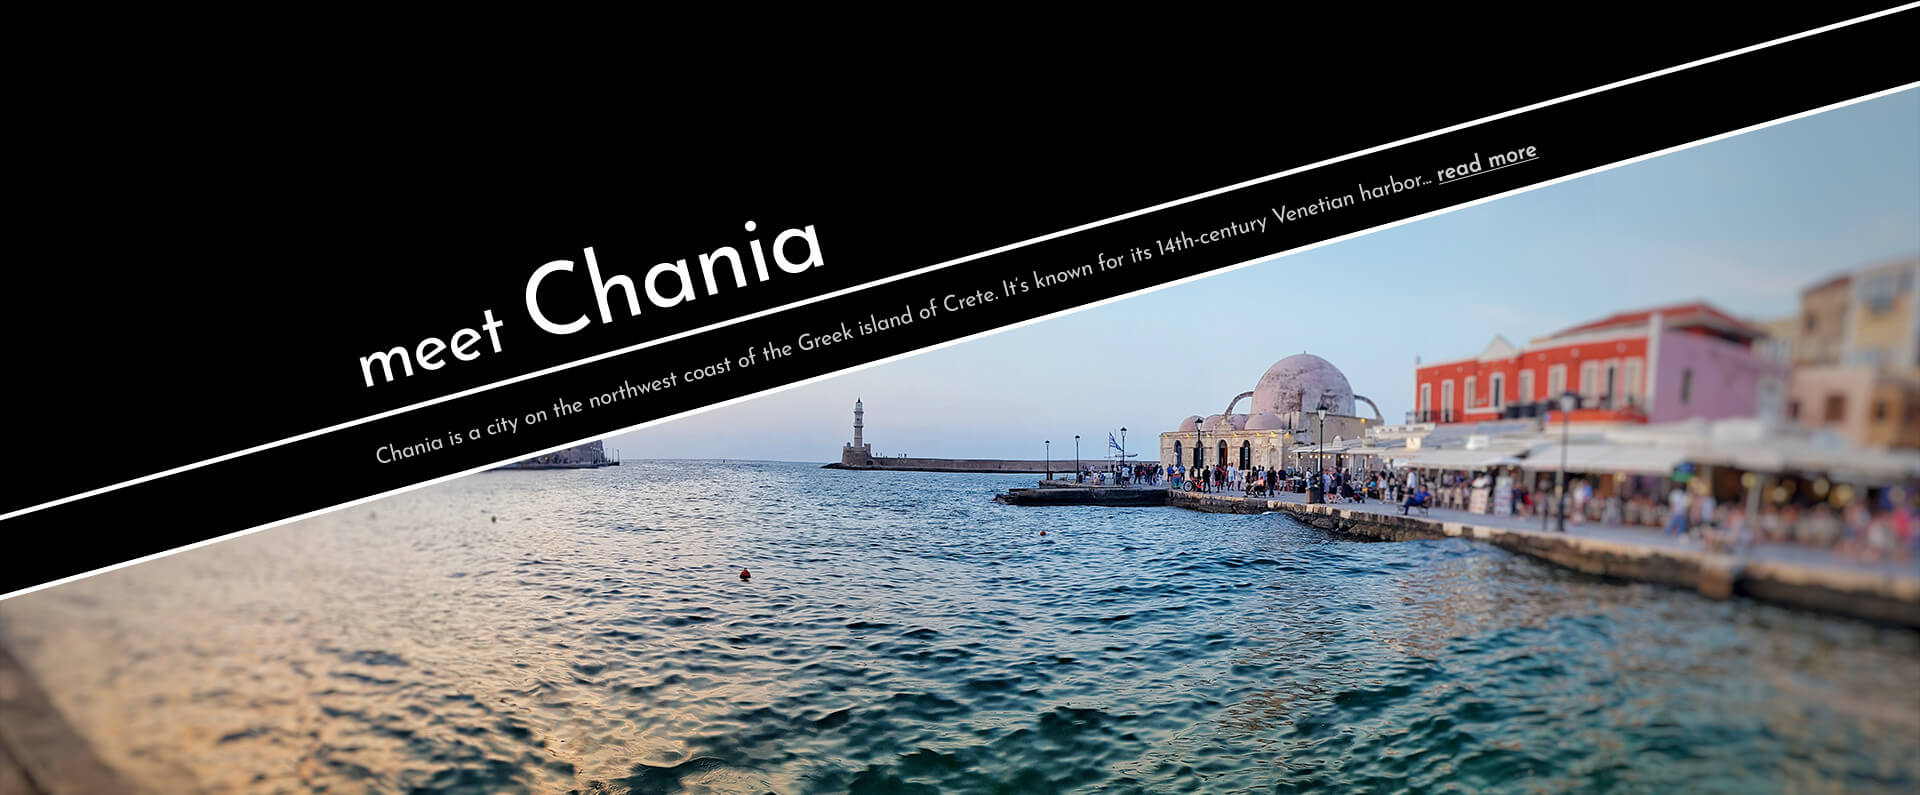 Meet the beautiful city of Chania